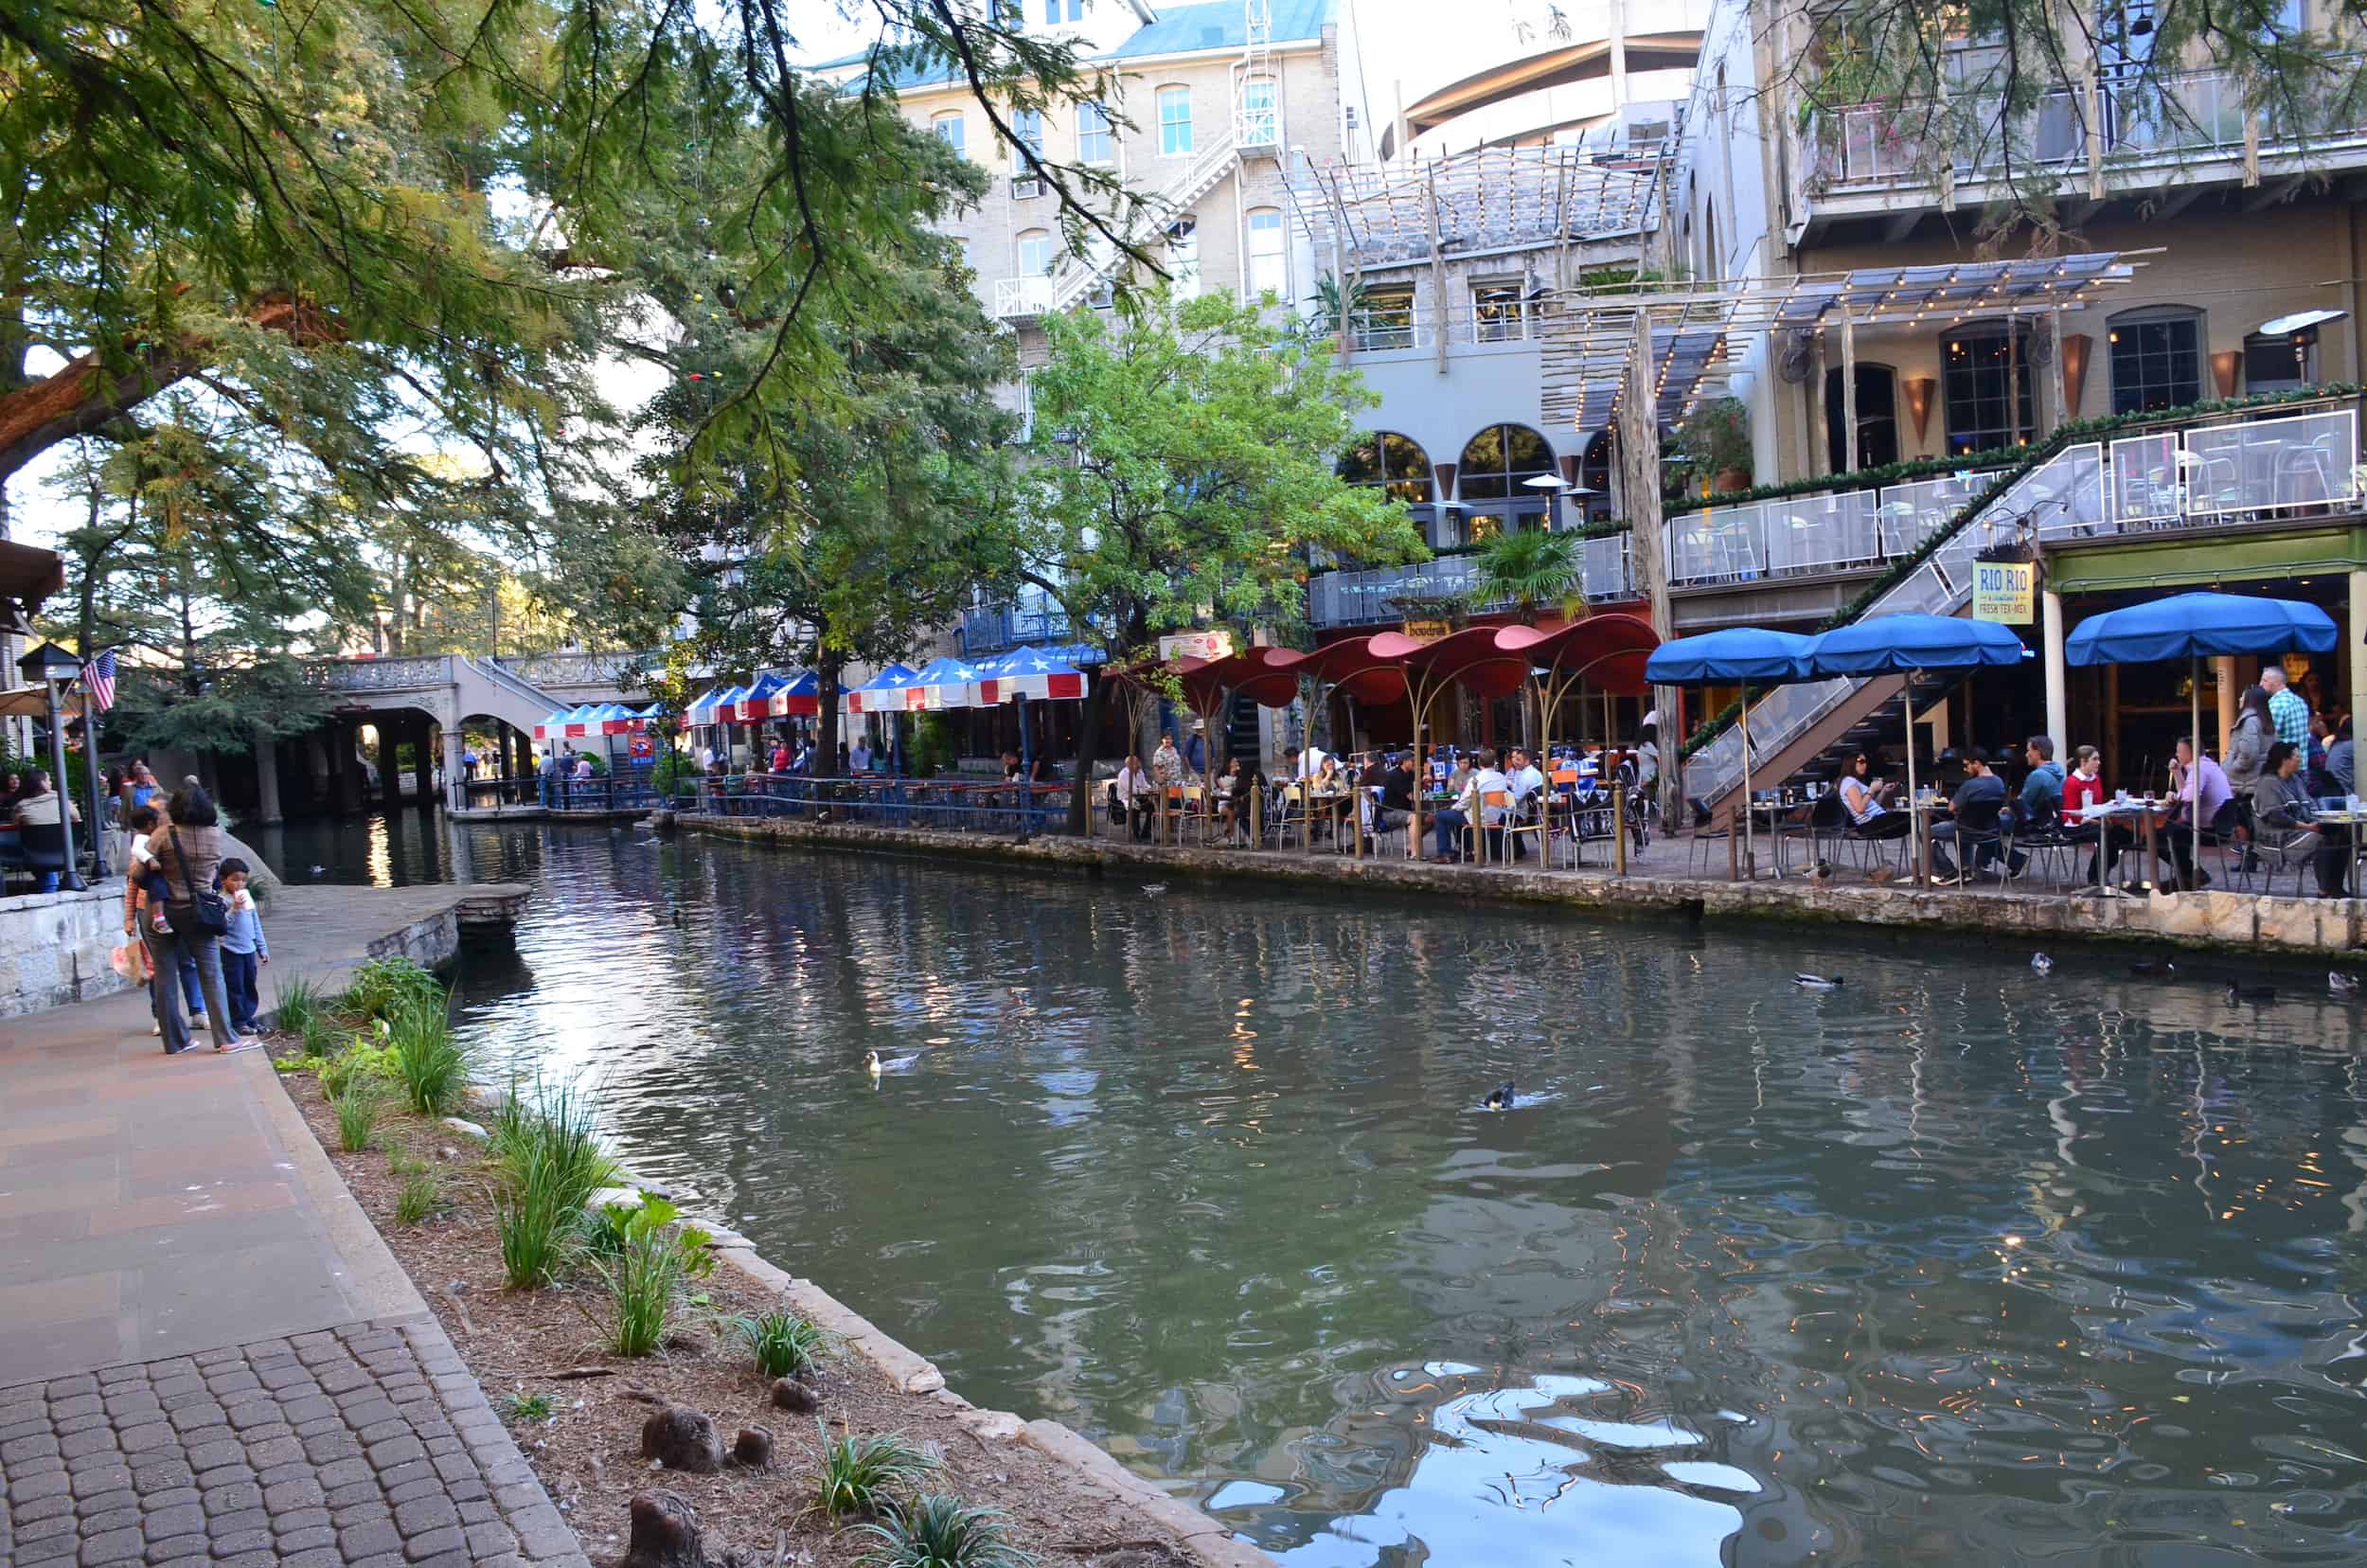 Restaurants along the river on the San Antonio River Walk in San Antonio, Texas